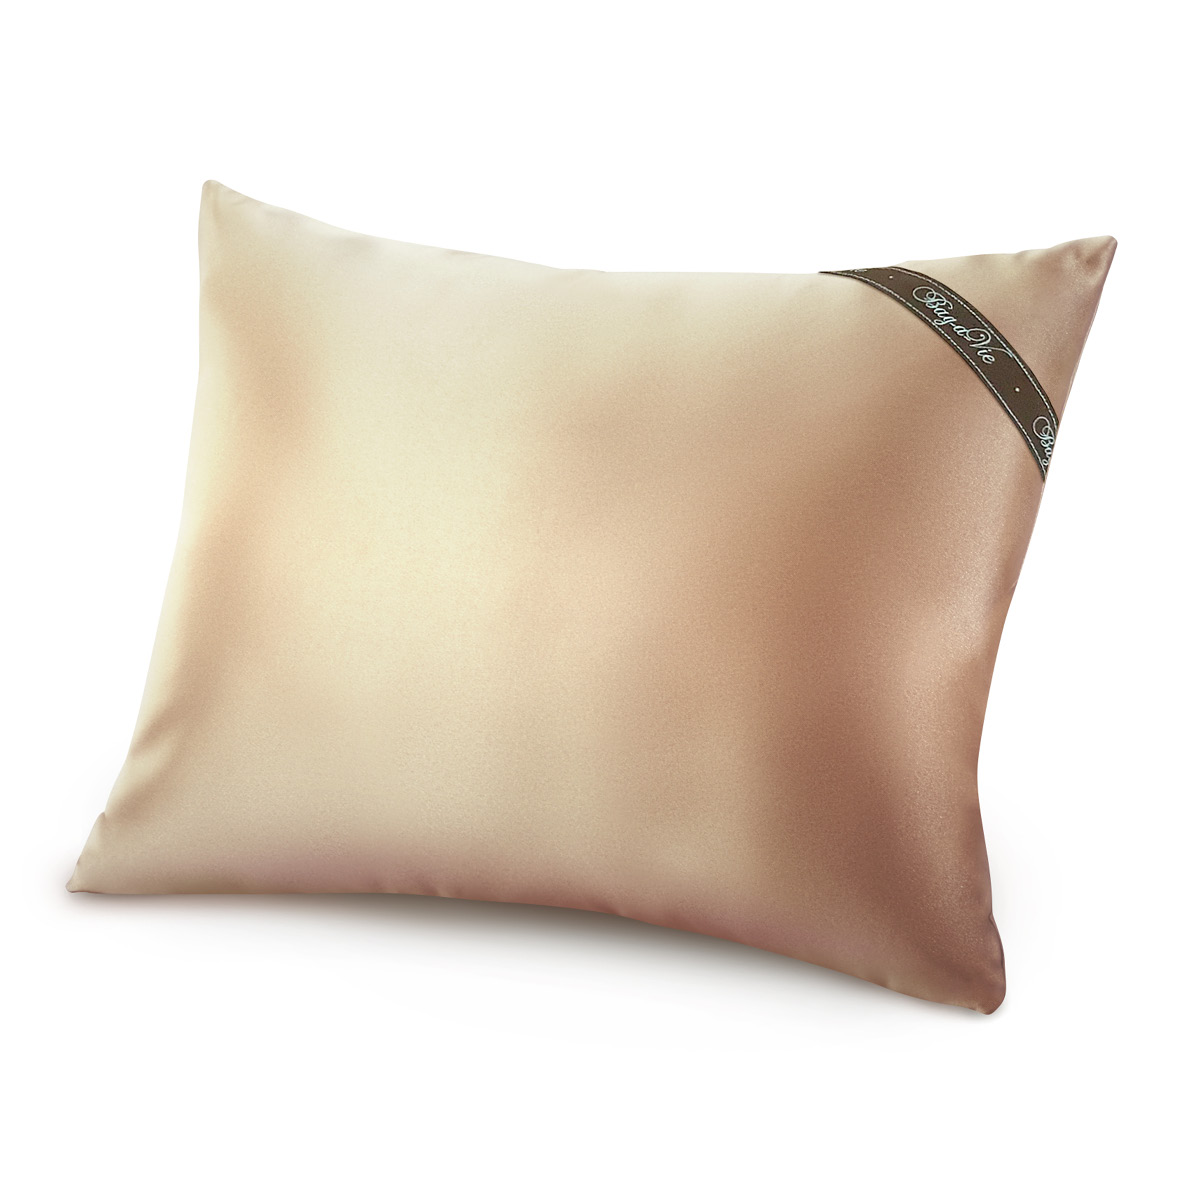  Bag-a-Vie Purse Shaper Pillow Insert - Herringbone